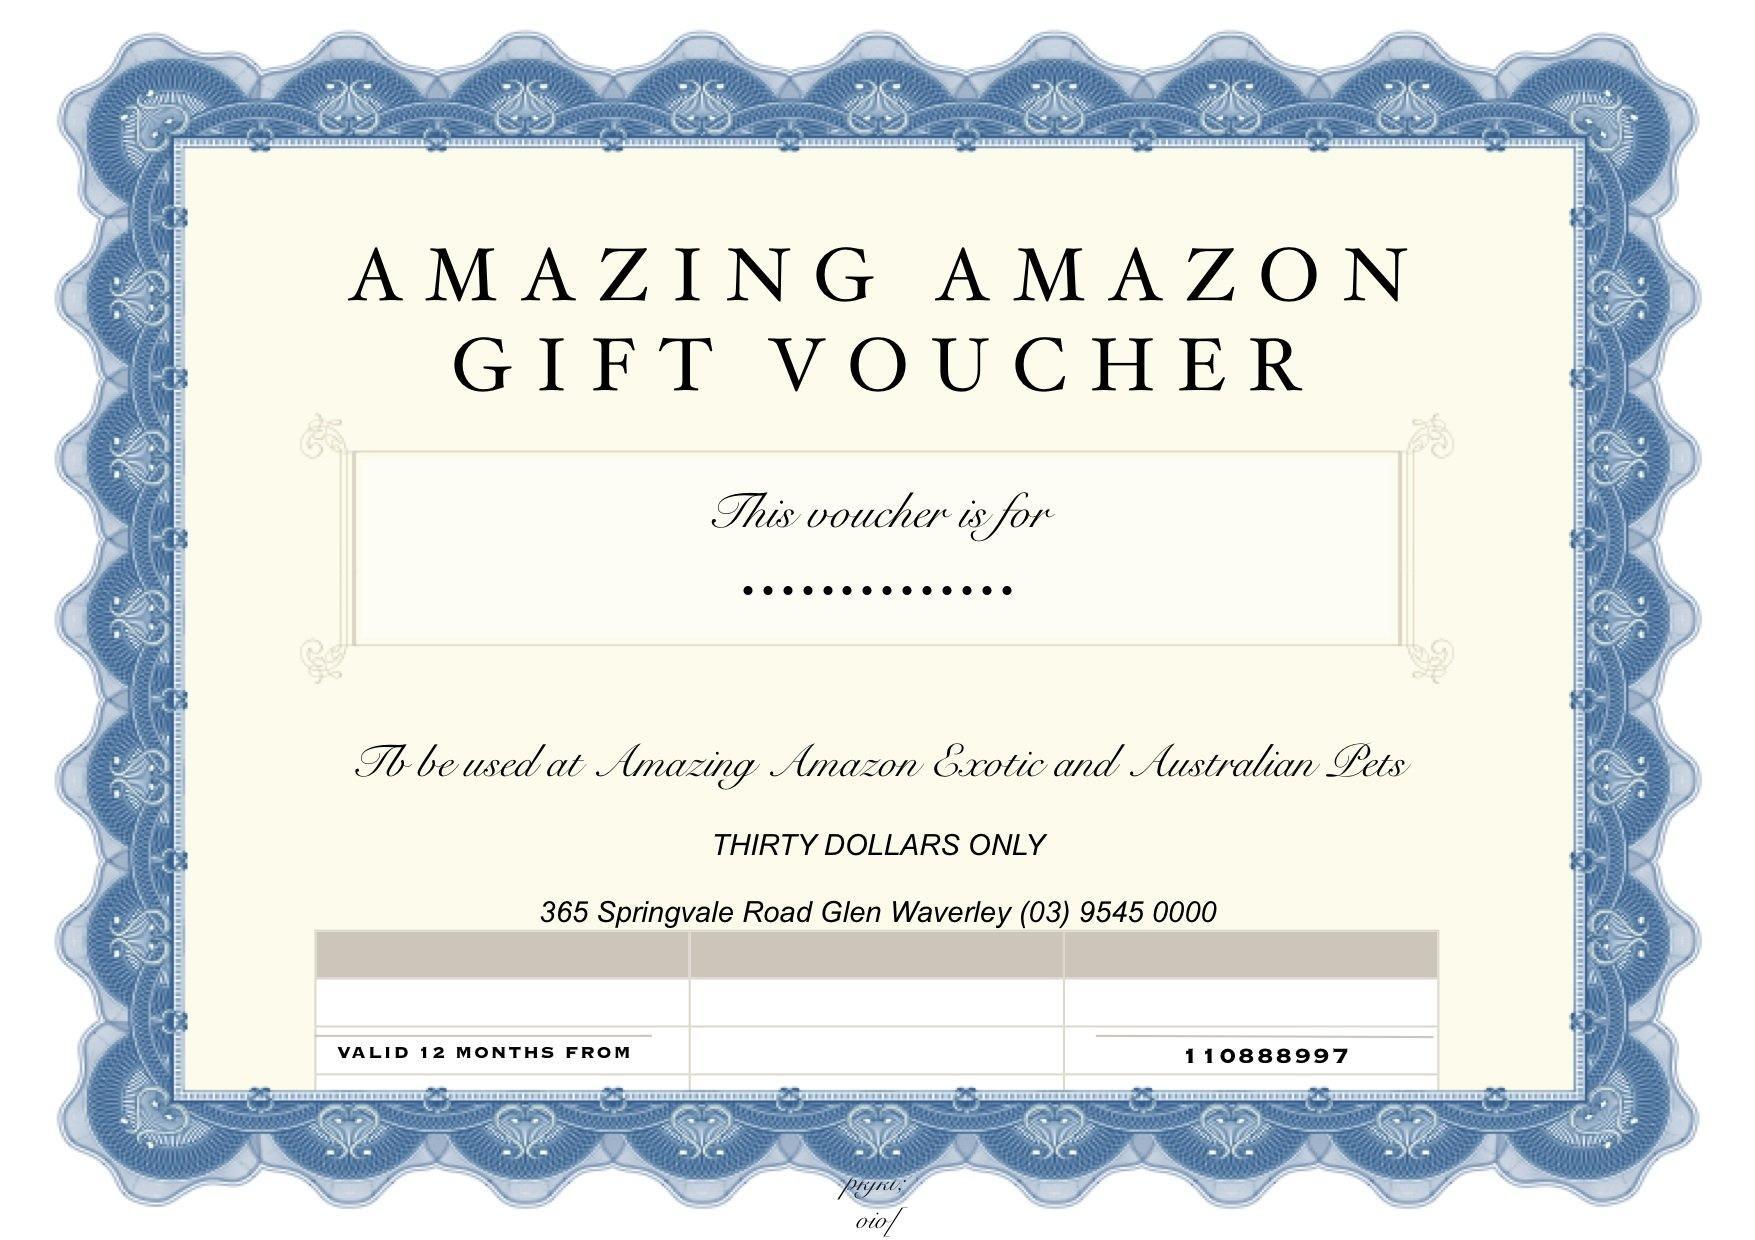 Gift Voucher $30 FREE DELIVERY - Amazing Amazon